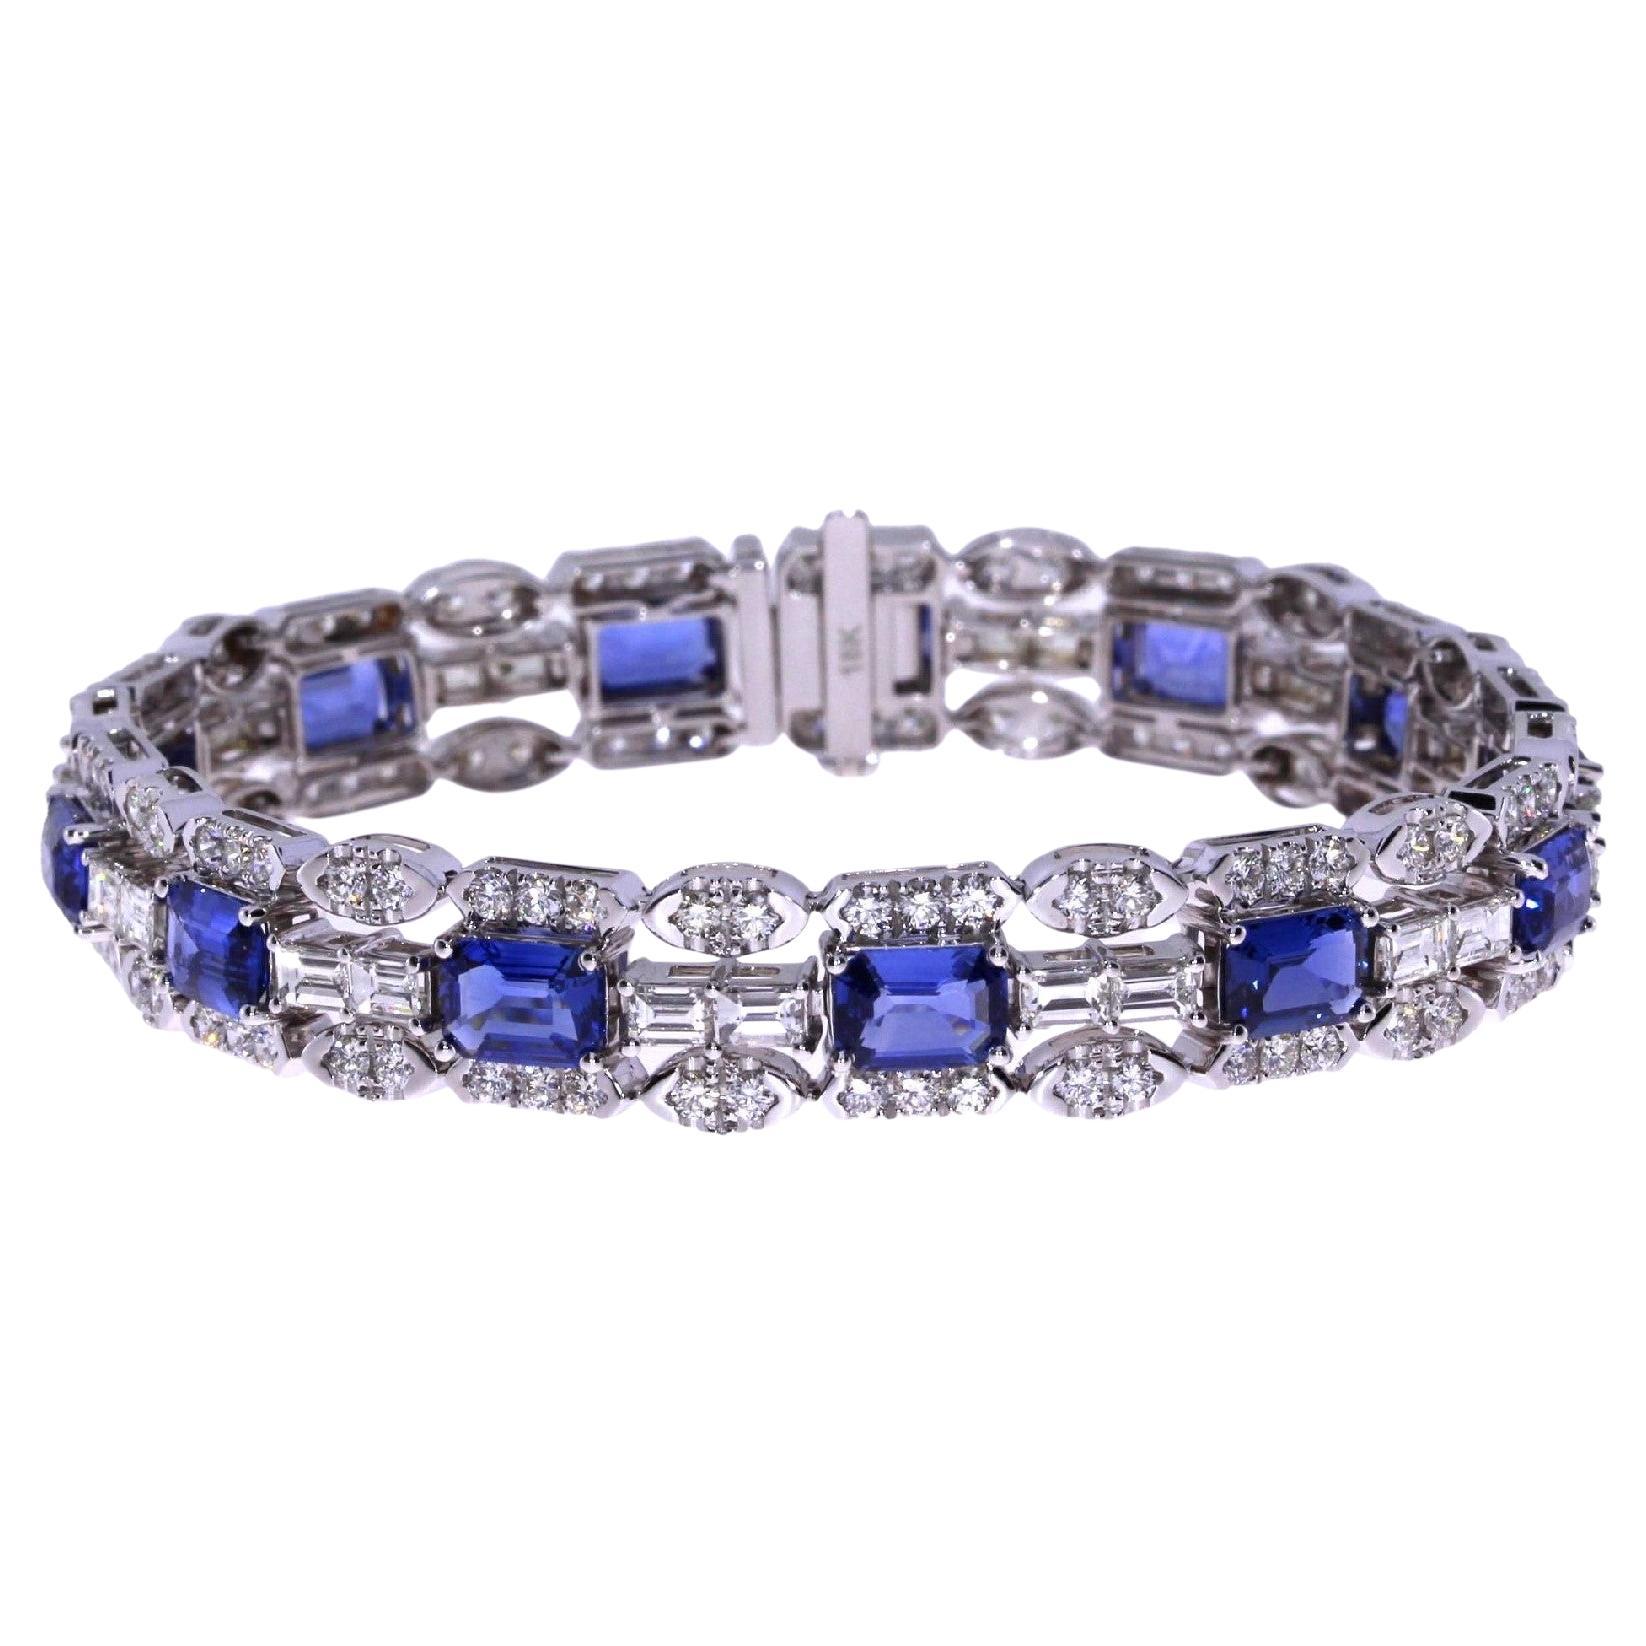 13.18ct Ceylon Blue Sapphire and Diamond Bracelet